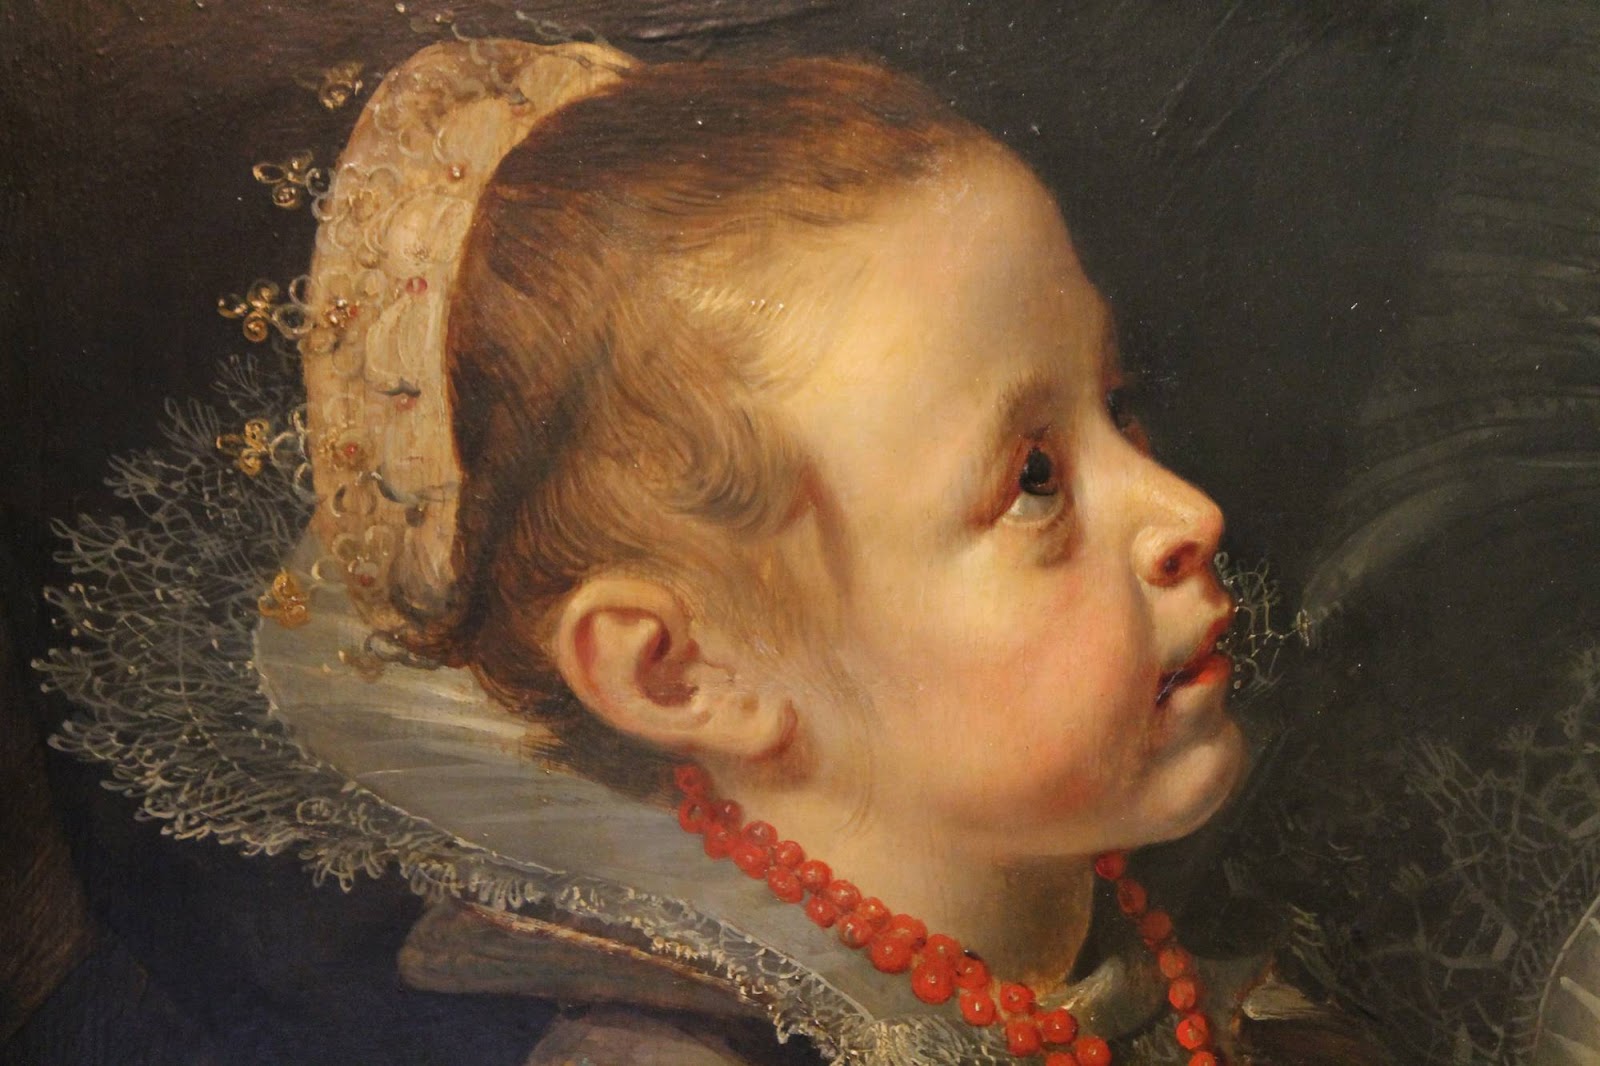 Peter+Paul+Rubens-1577-1640 (111).jpg